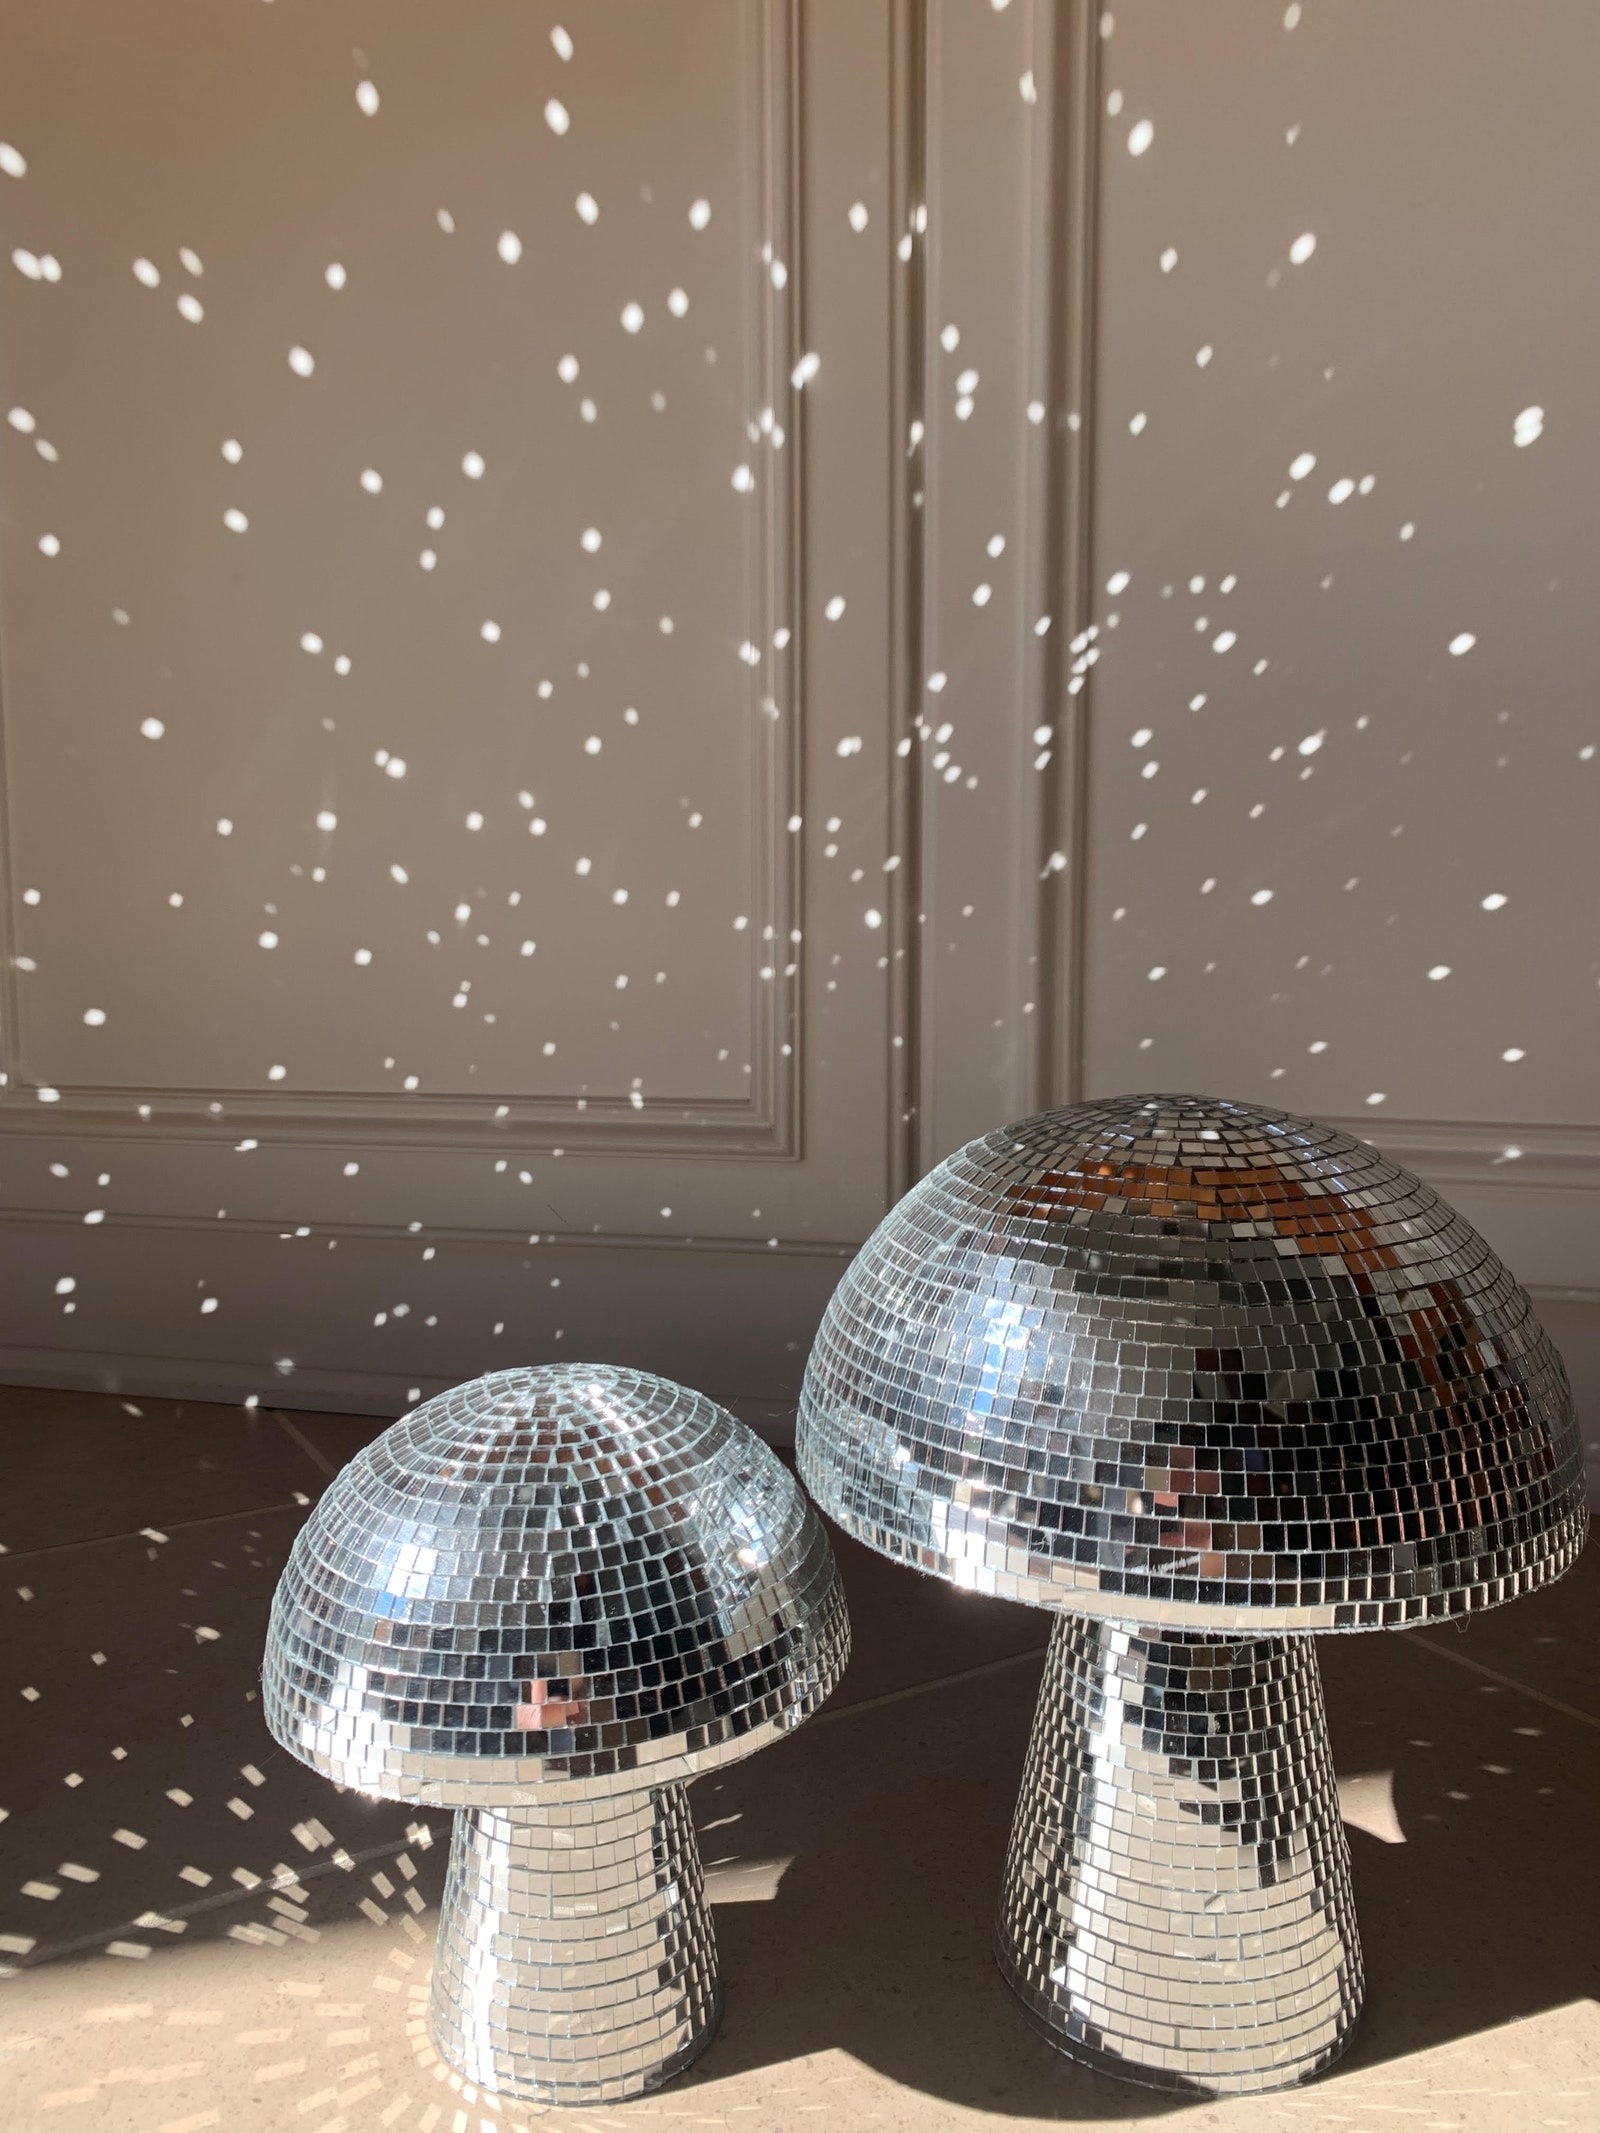 Mushroom disco balls deliver a glamorous take on mushroominspired decor.